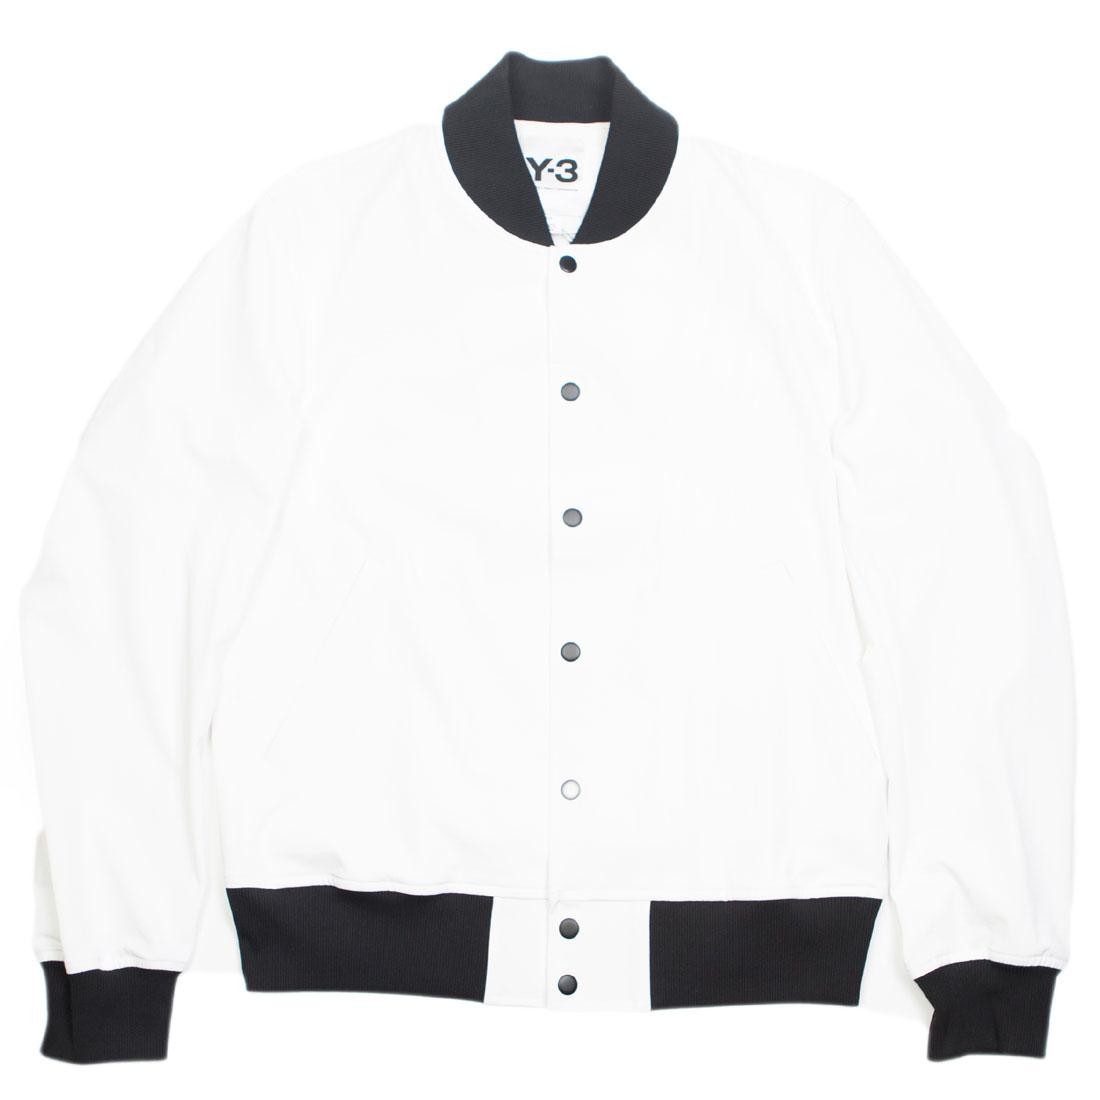 Negen Omleiding Waarnemen 3 Men PU Bomber Jacket white black - adidas originals xplr mens pants size  e 42x28 - Adidas Y